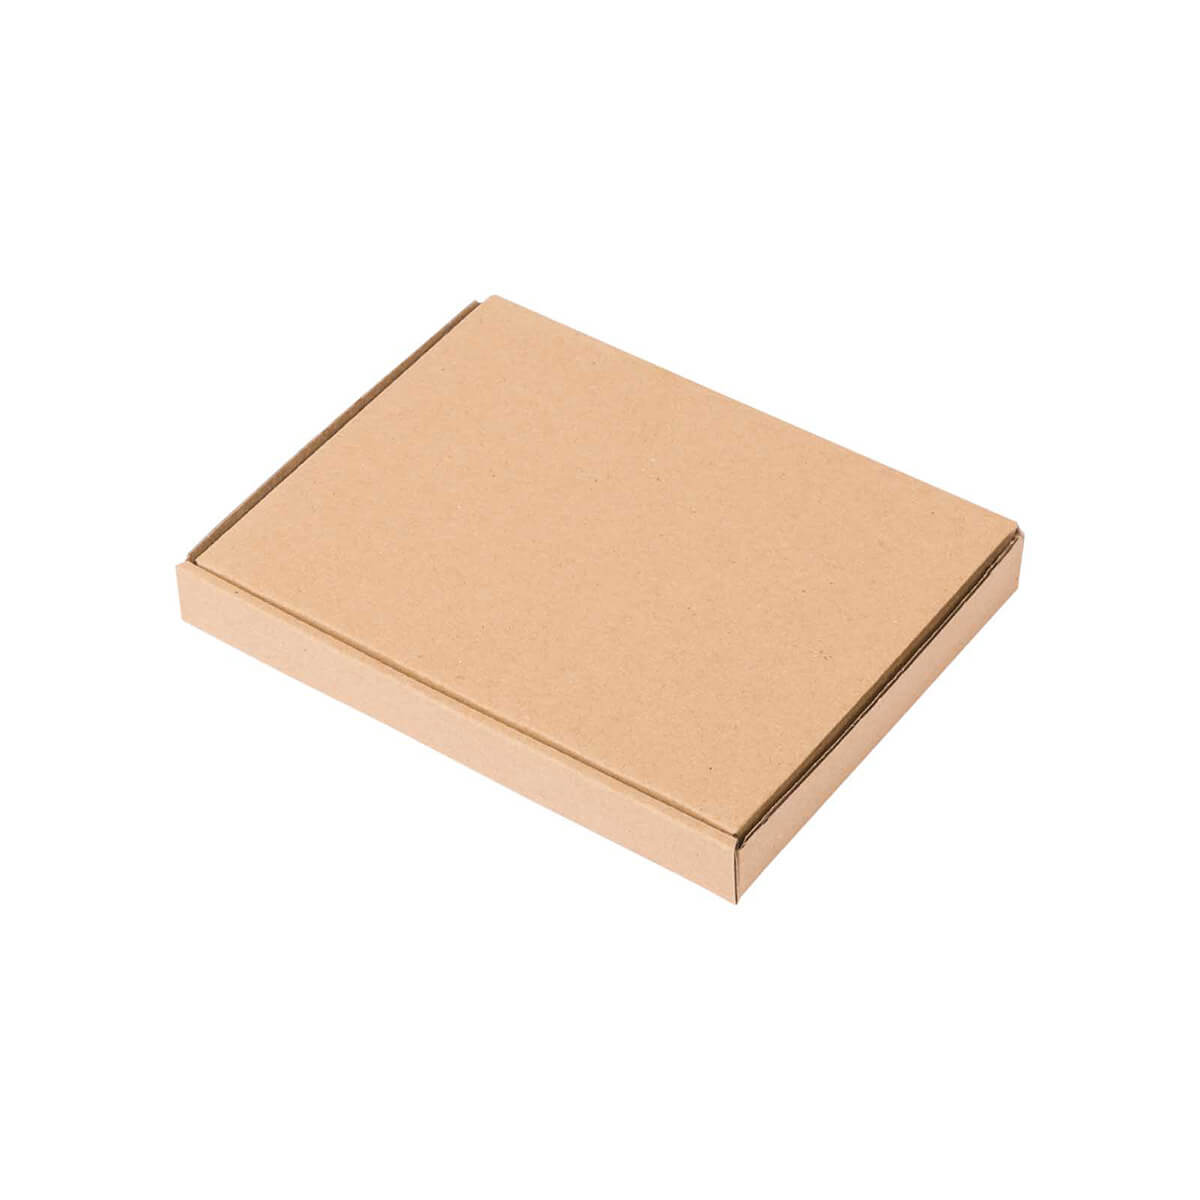 Big letter-sized carton 165x125x20 mm - GB 0, brown